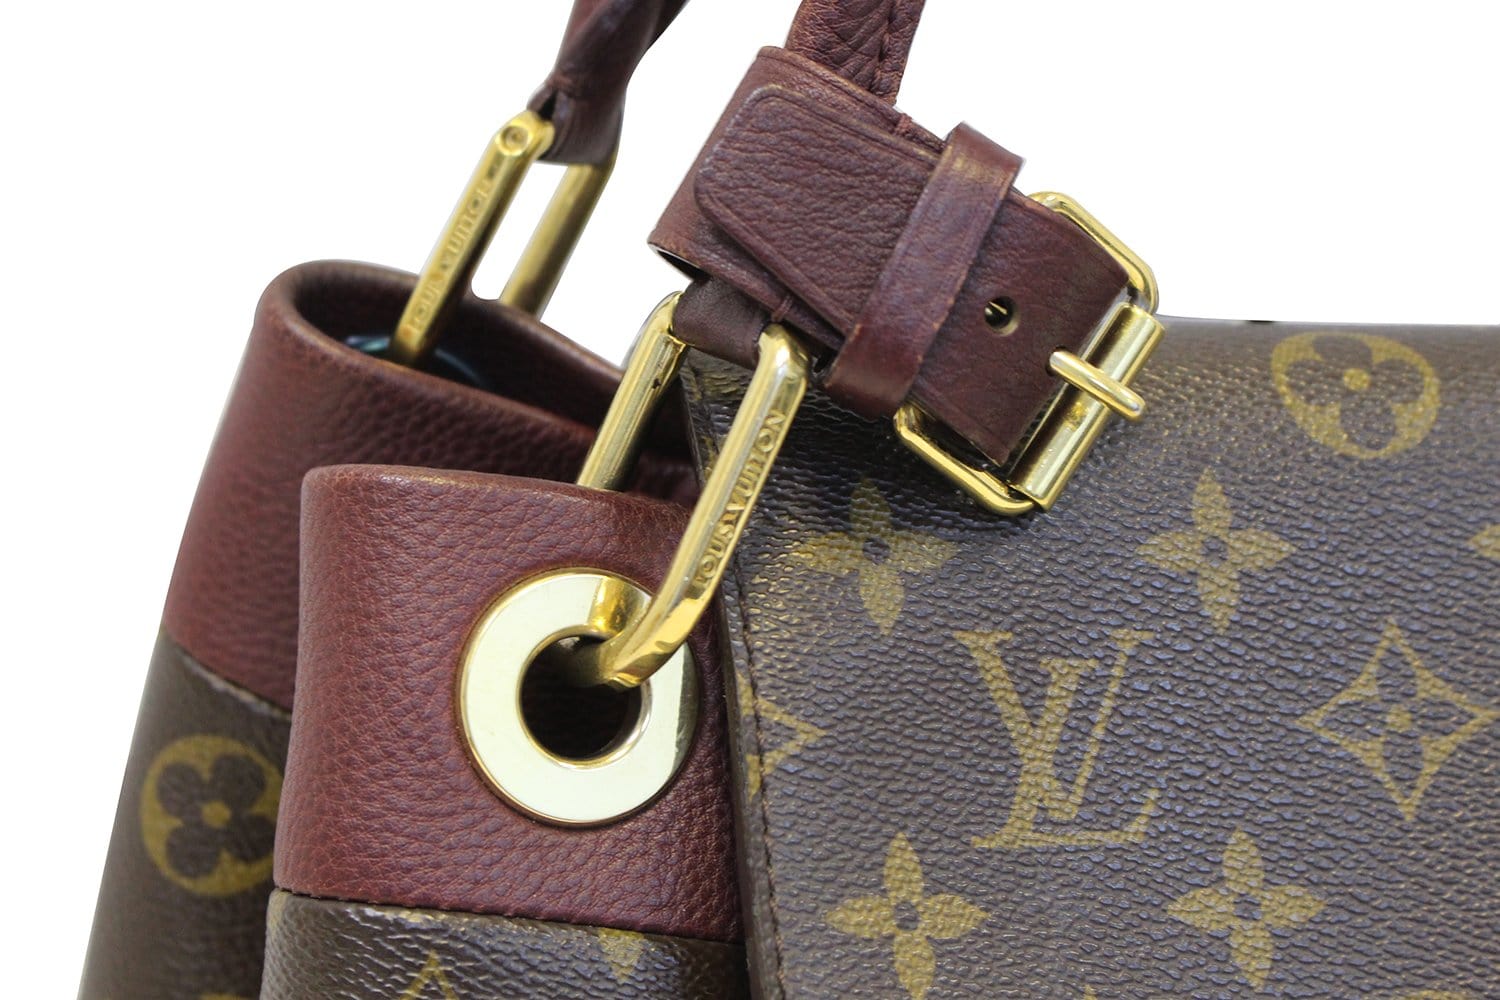 Monogram Bags Collection for WOMEN, LOUIS VUITTON ®